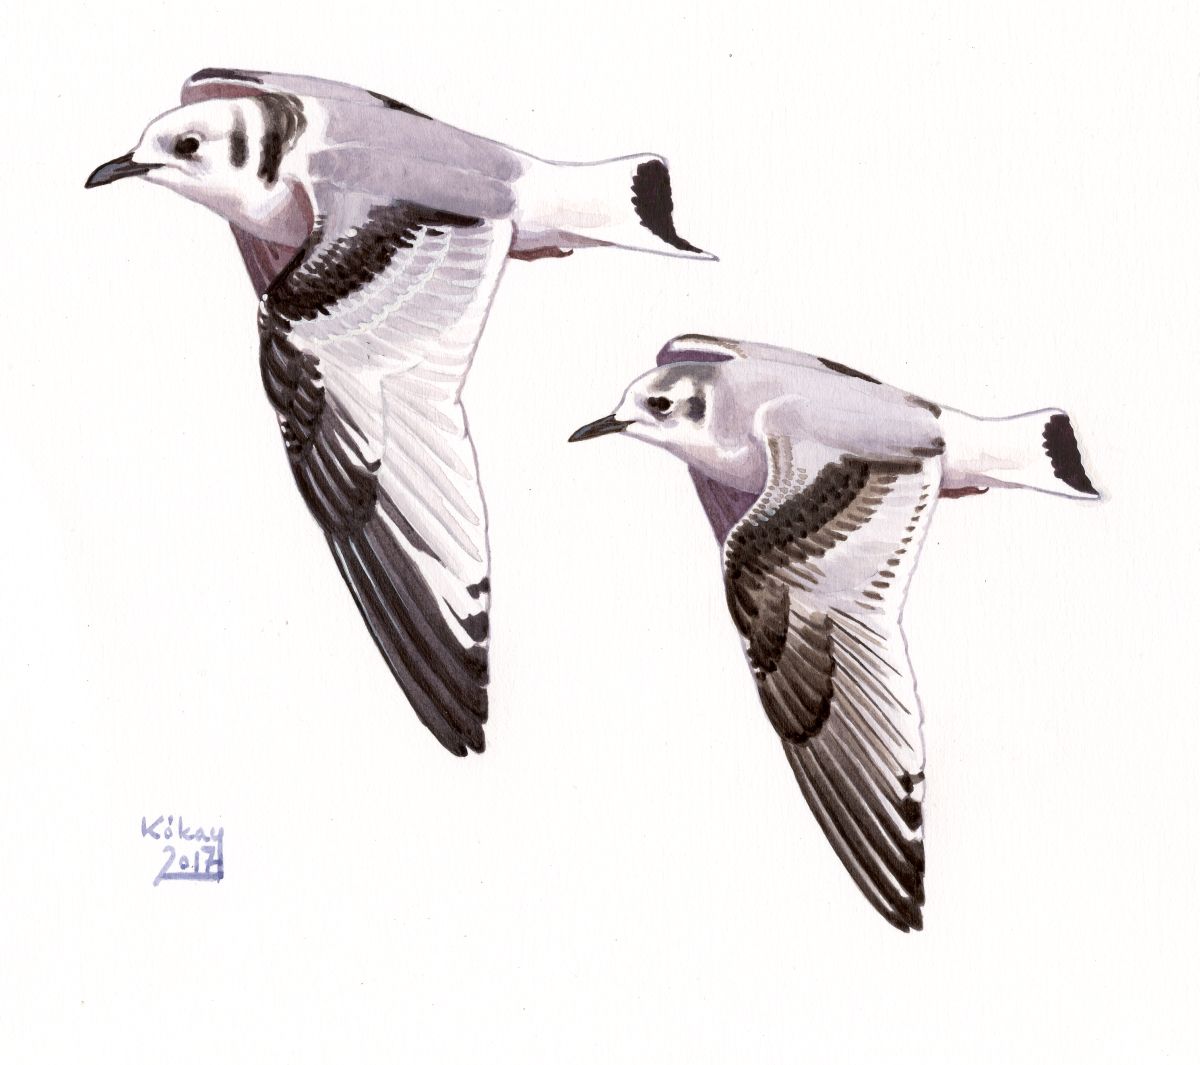 Juvenile Kittiwake and Little Gull (Rissa tridactyla, Larus minutus), watercolour and bodycolour on paper